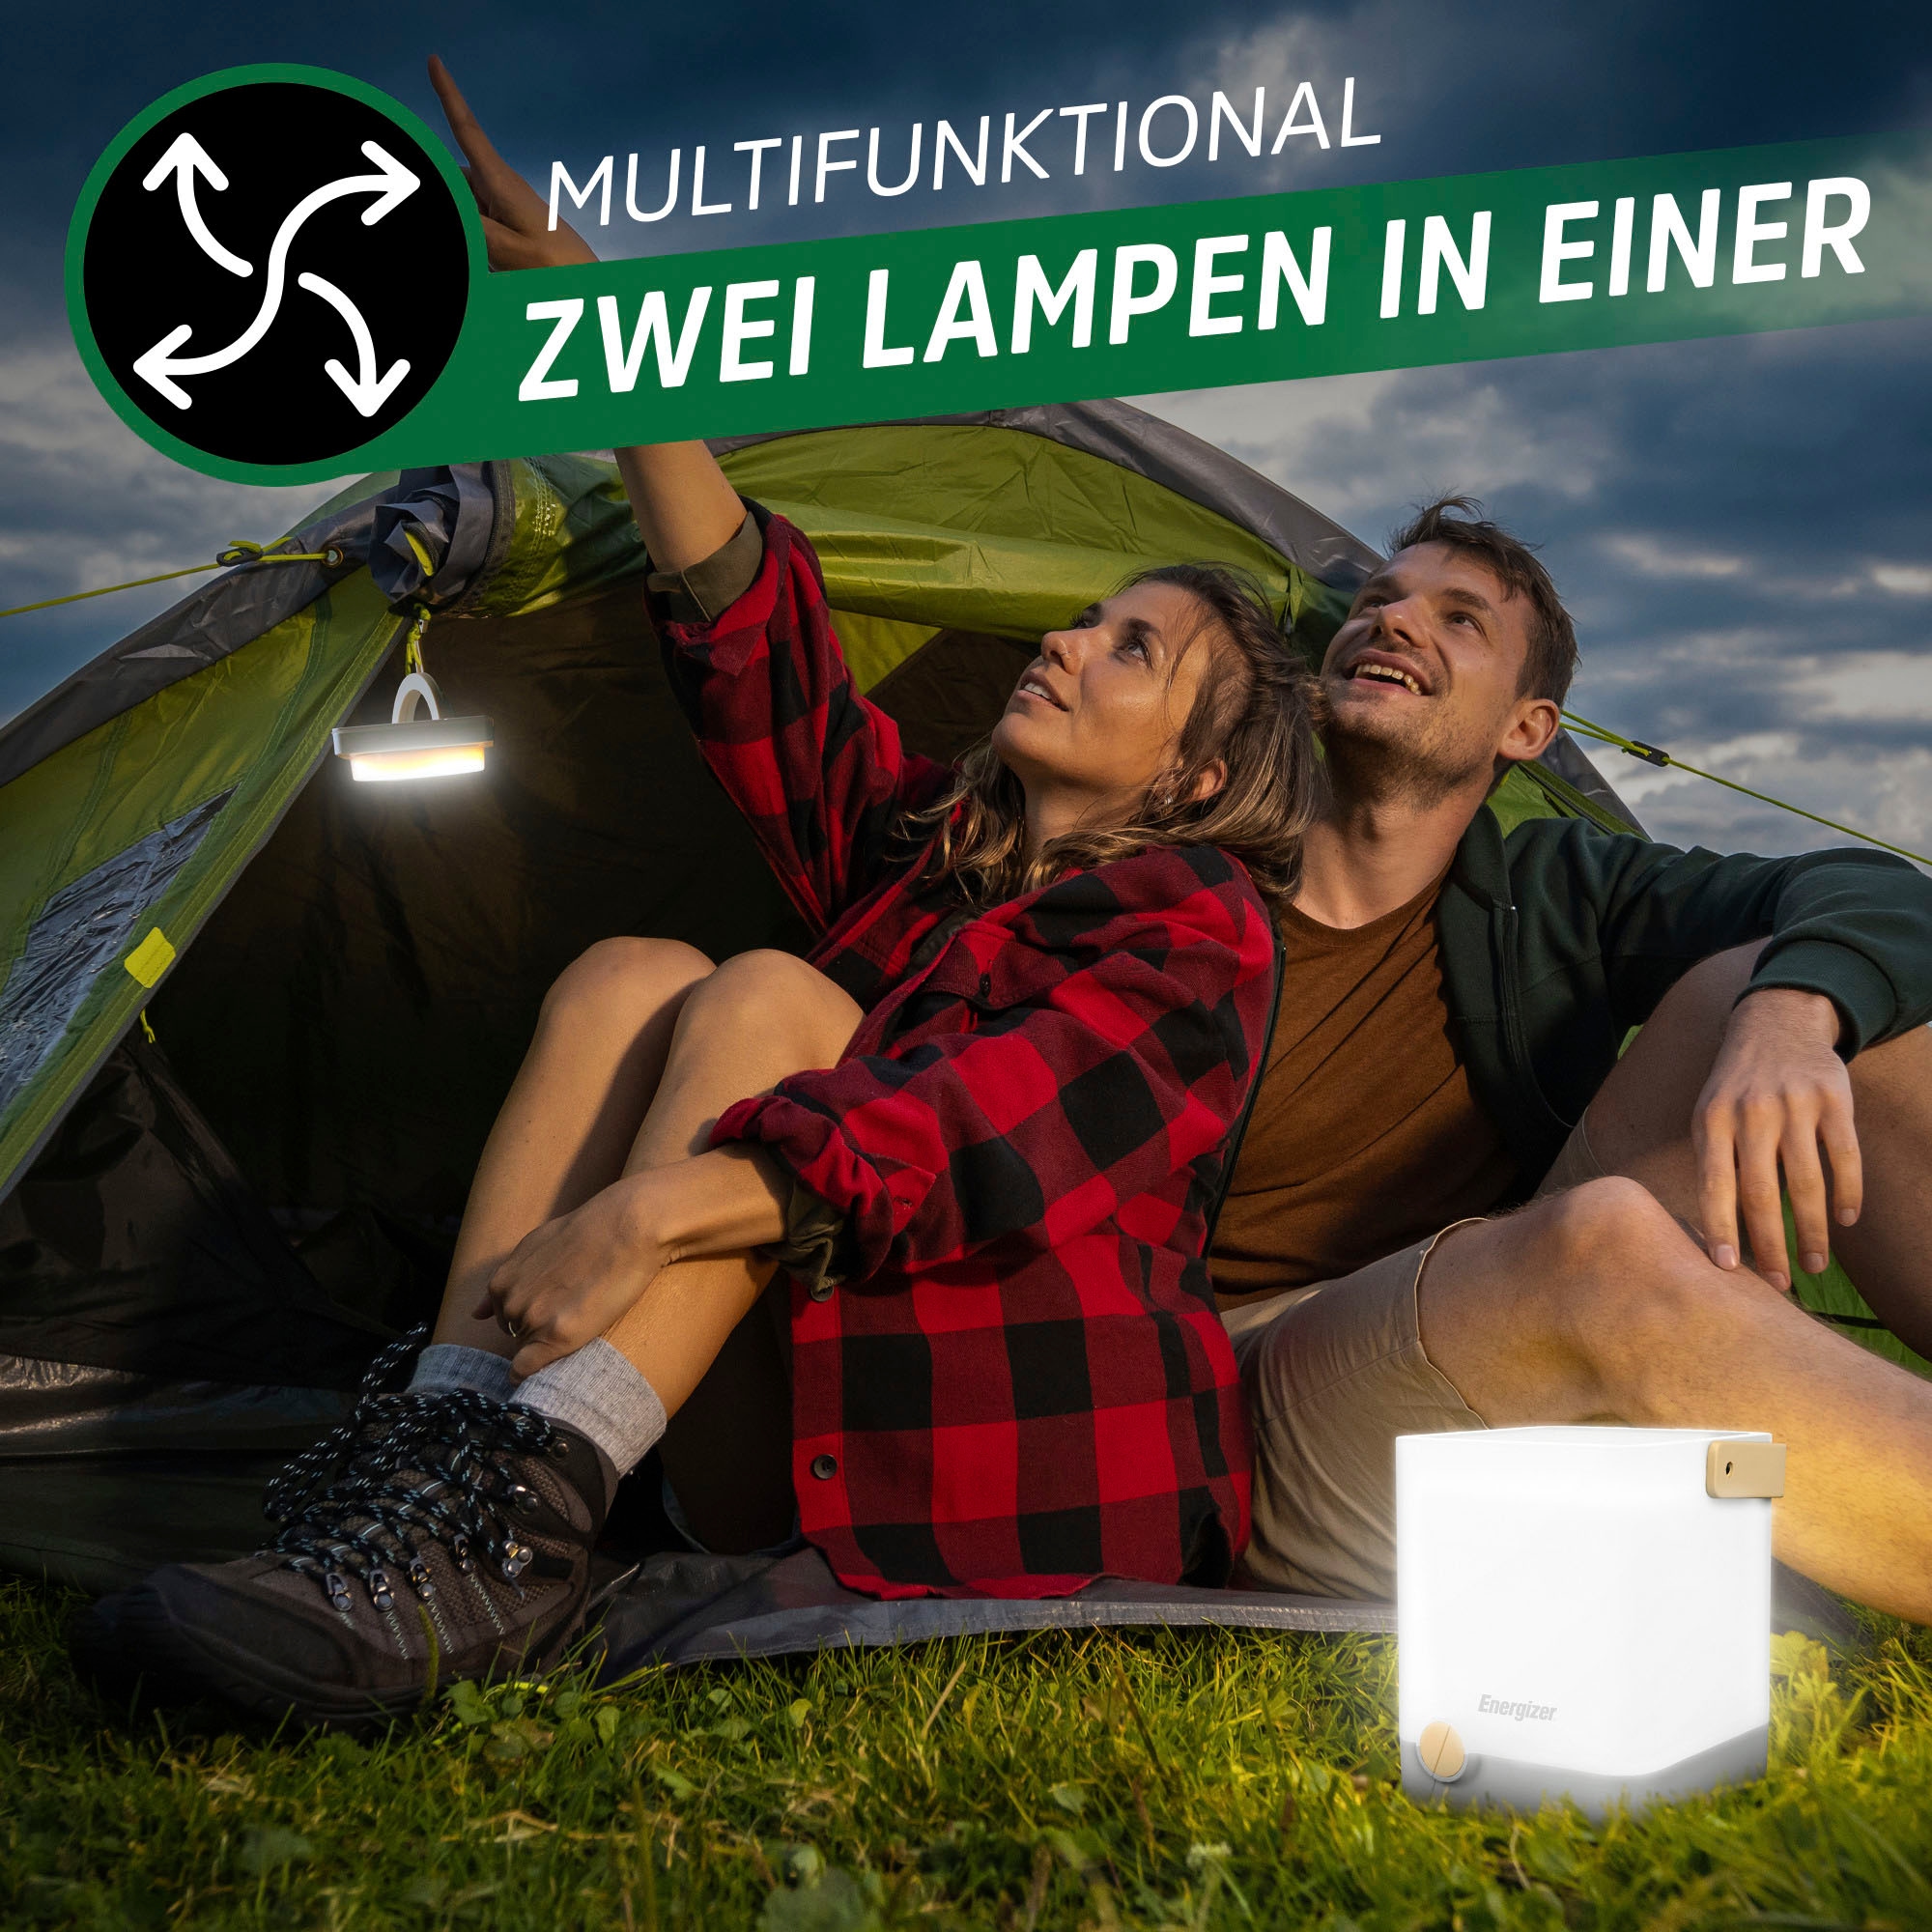 Energizer Taschenlampe »Hybrid Light Cube« bei Power